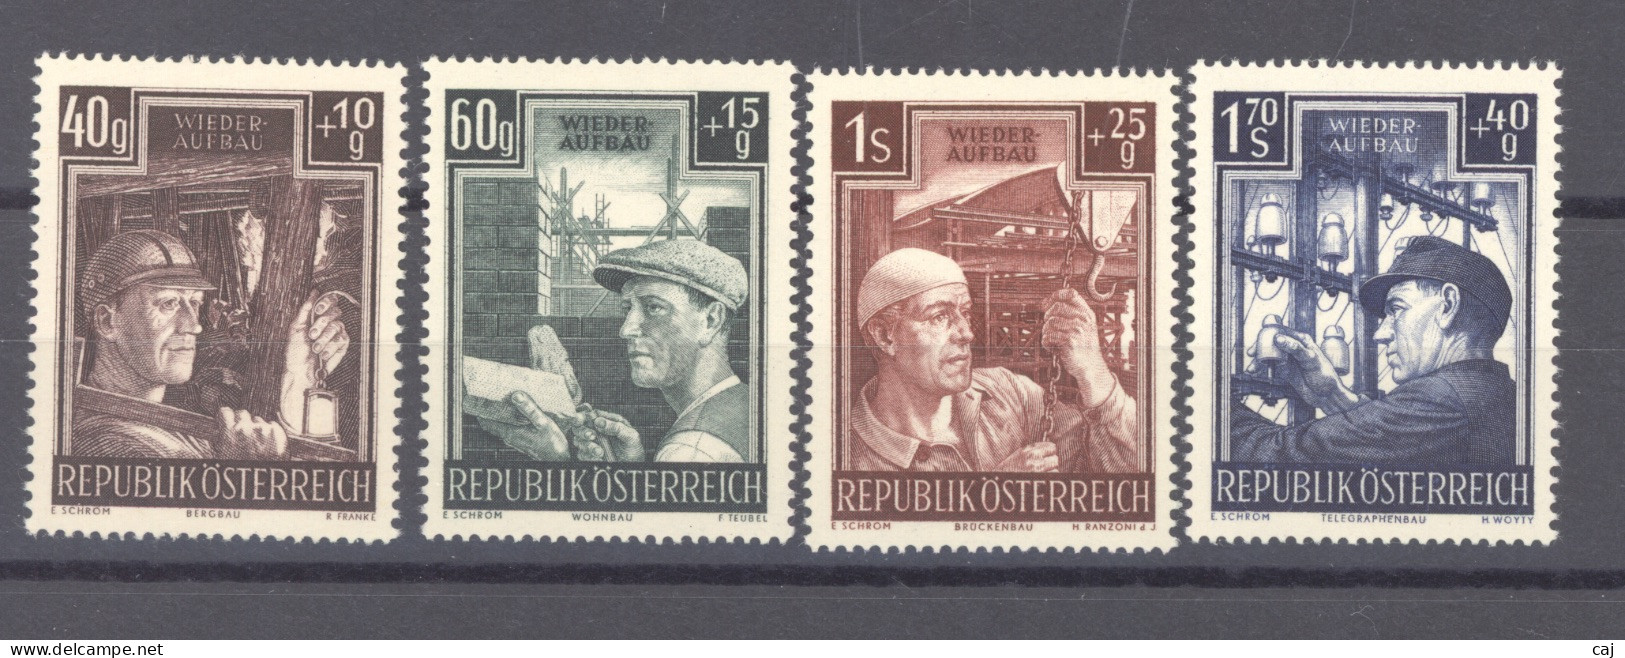 Autriche  :  Yv  794-97  Mi  960-63  ** - Unused Stamps